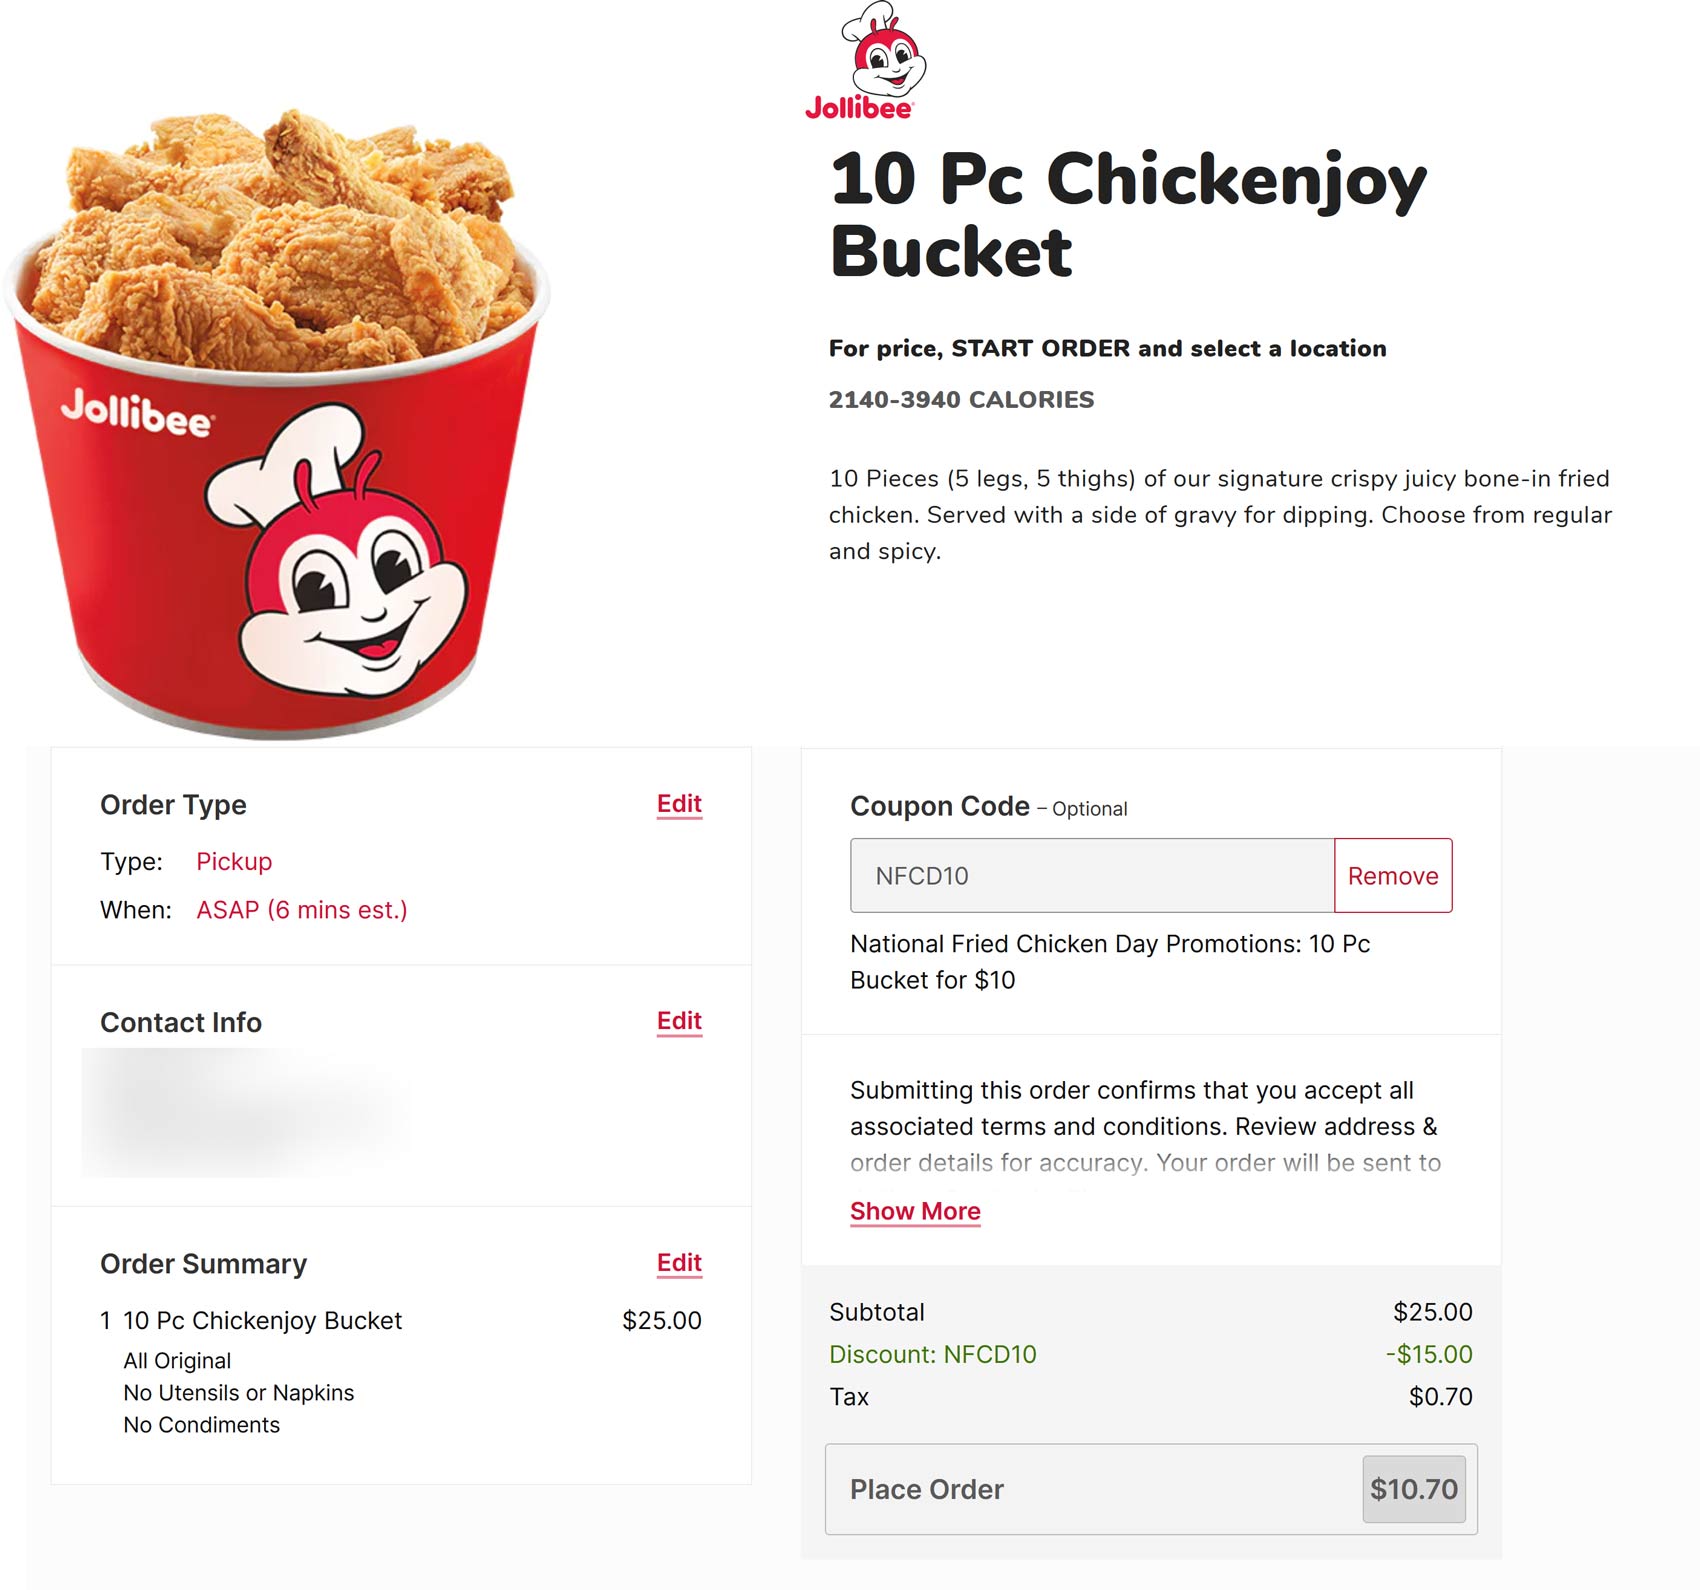 Jollibee restaurants Coupon  10pc chicken bucket for $10 today at Jollibee via promo code NFCD10 #jollibee 